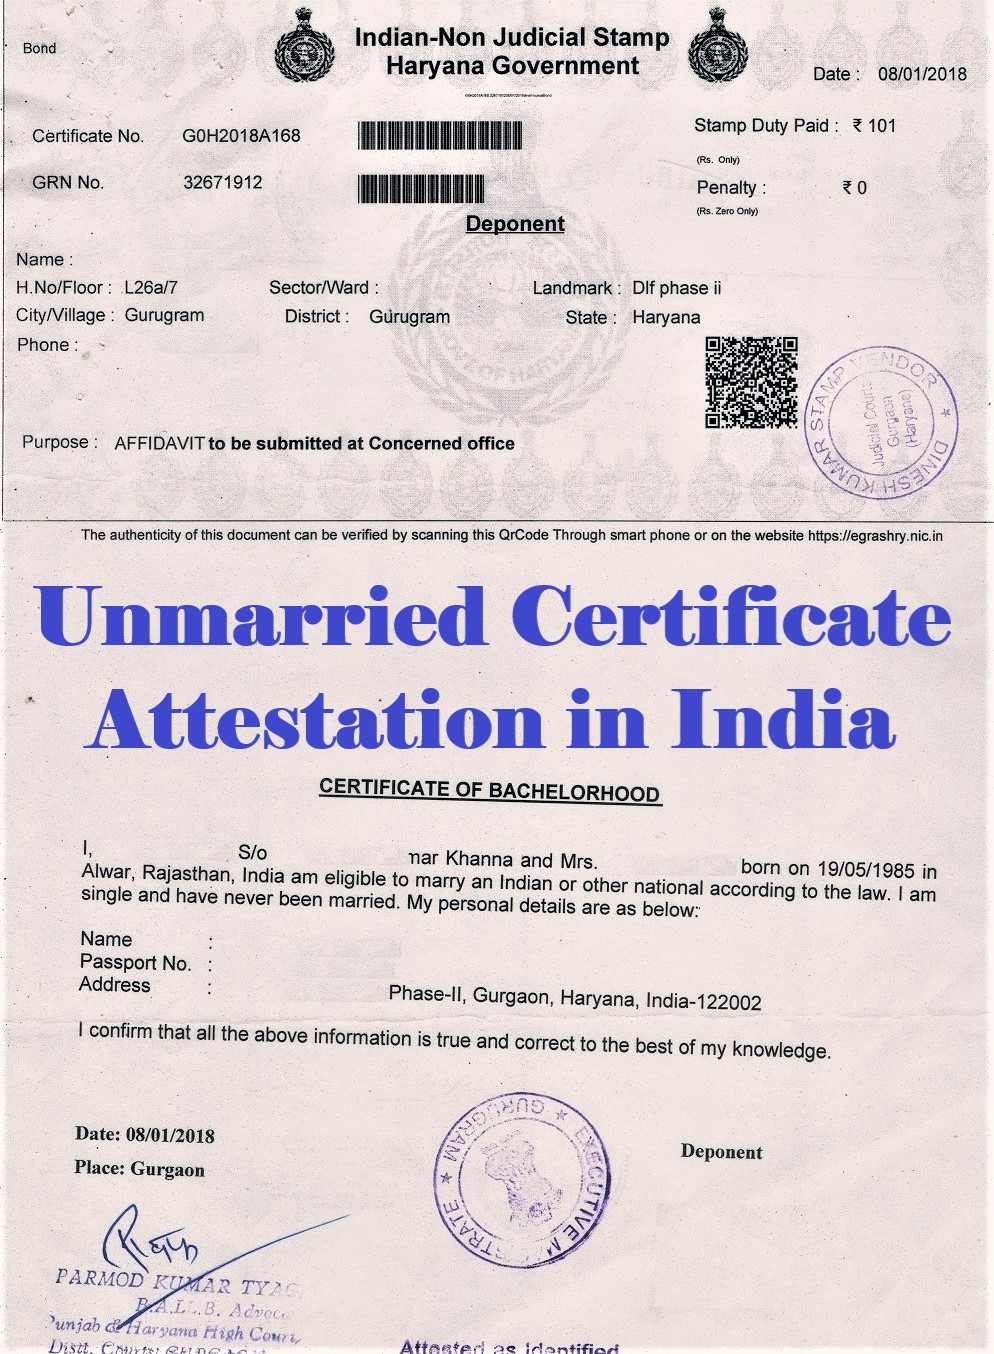 Unmarried Certificate Attestation from Burundi Embassy